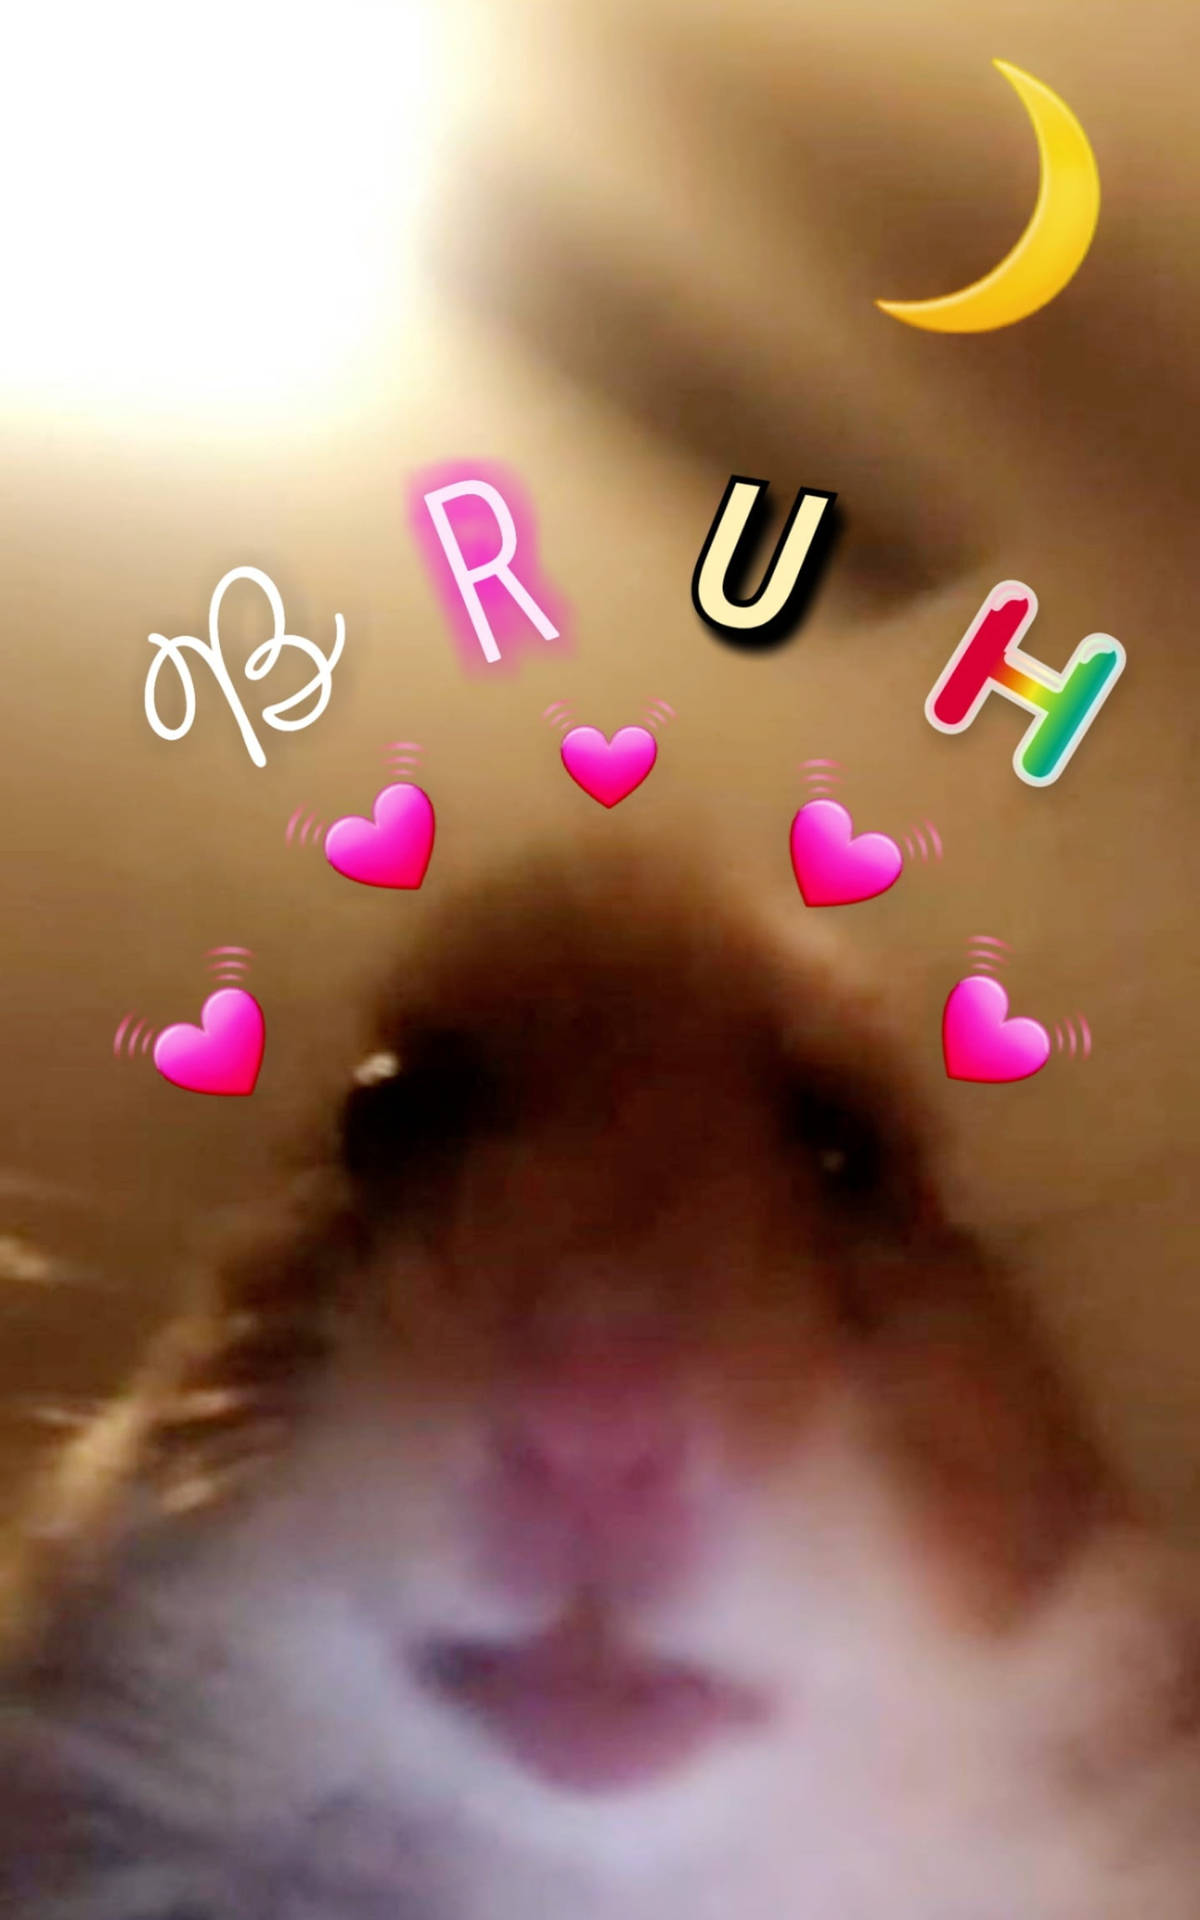 Hamster Bruh Hearts Meme